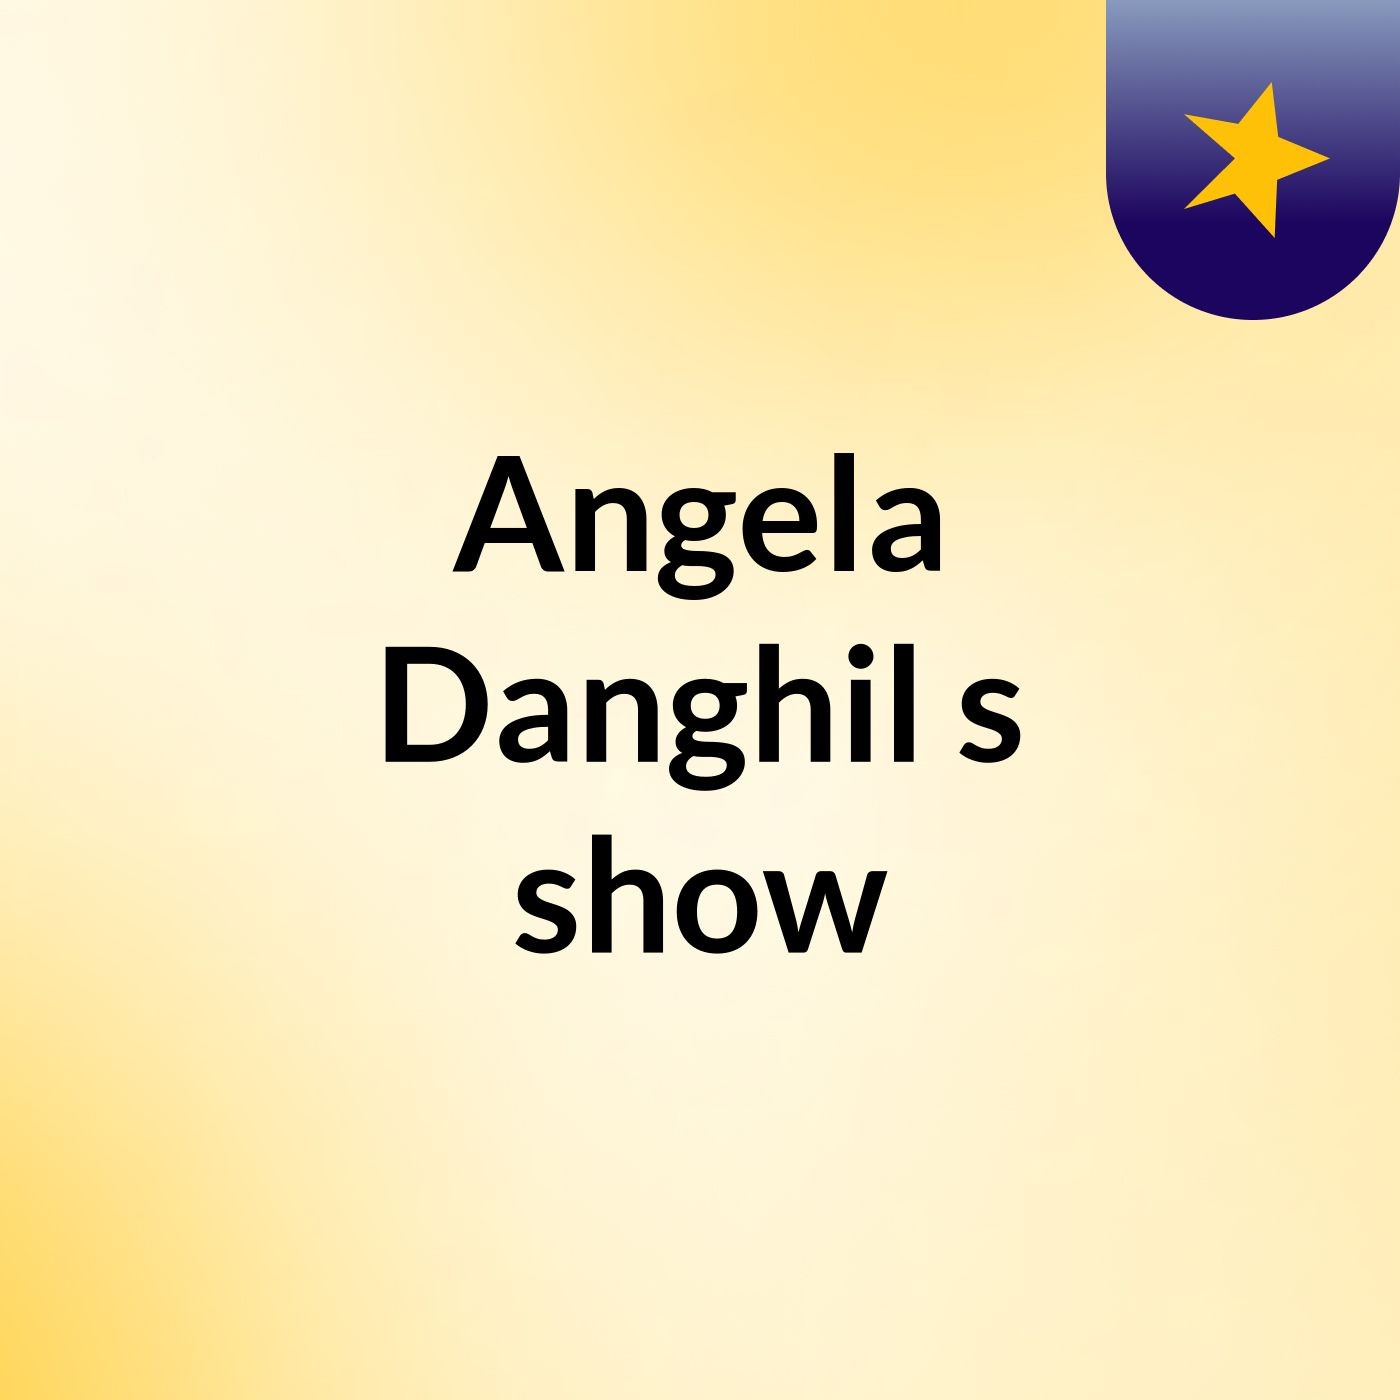 Angela Danghil's show